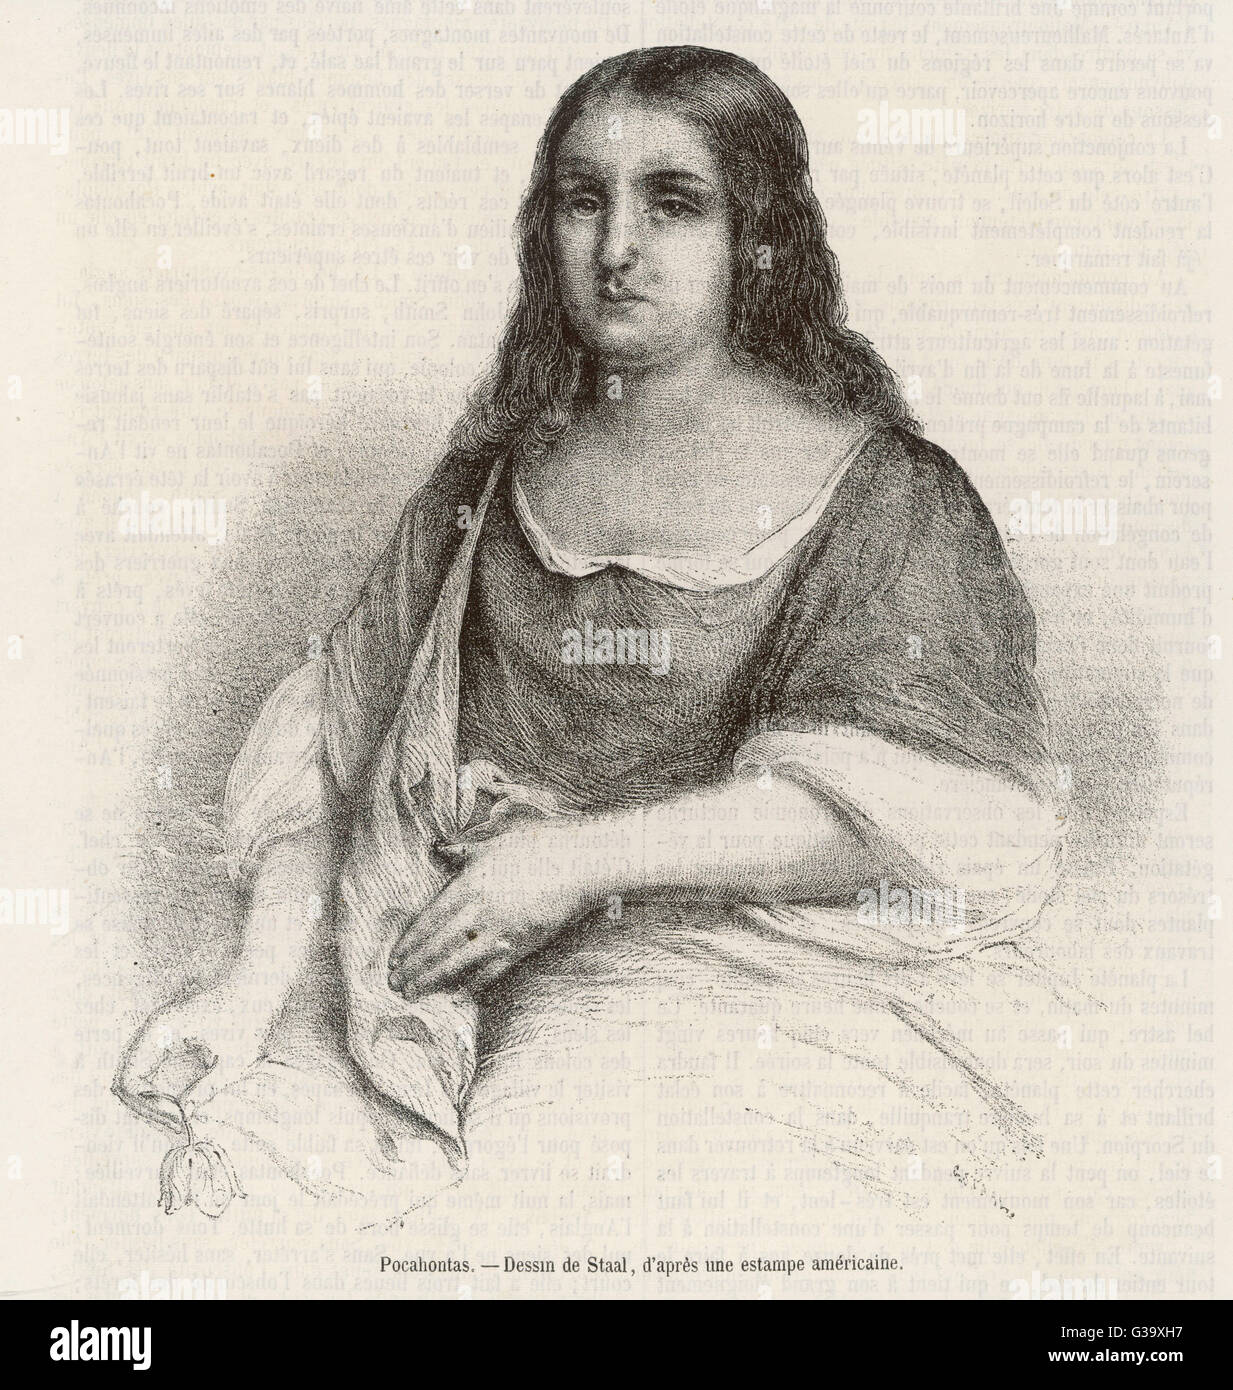 POCAHONTAS alias MATOAKA  American Indian princess        Date: 1595 - 1617 Stock Photo